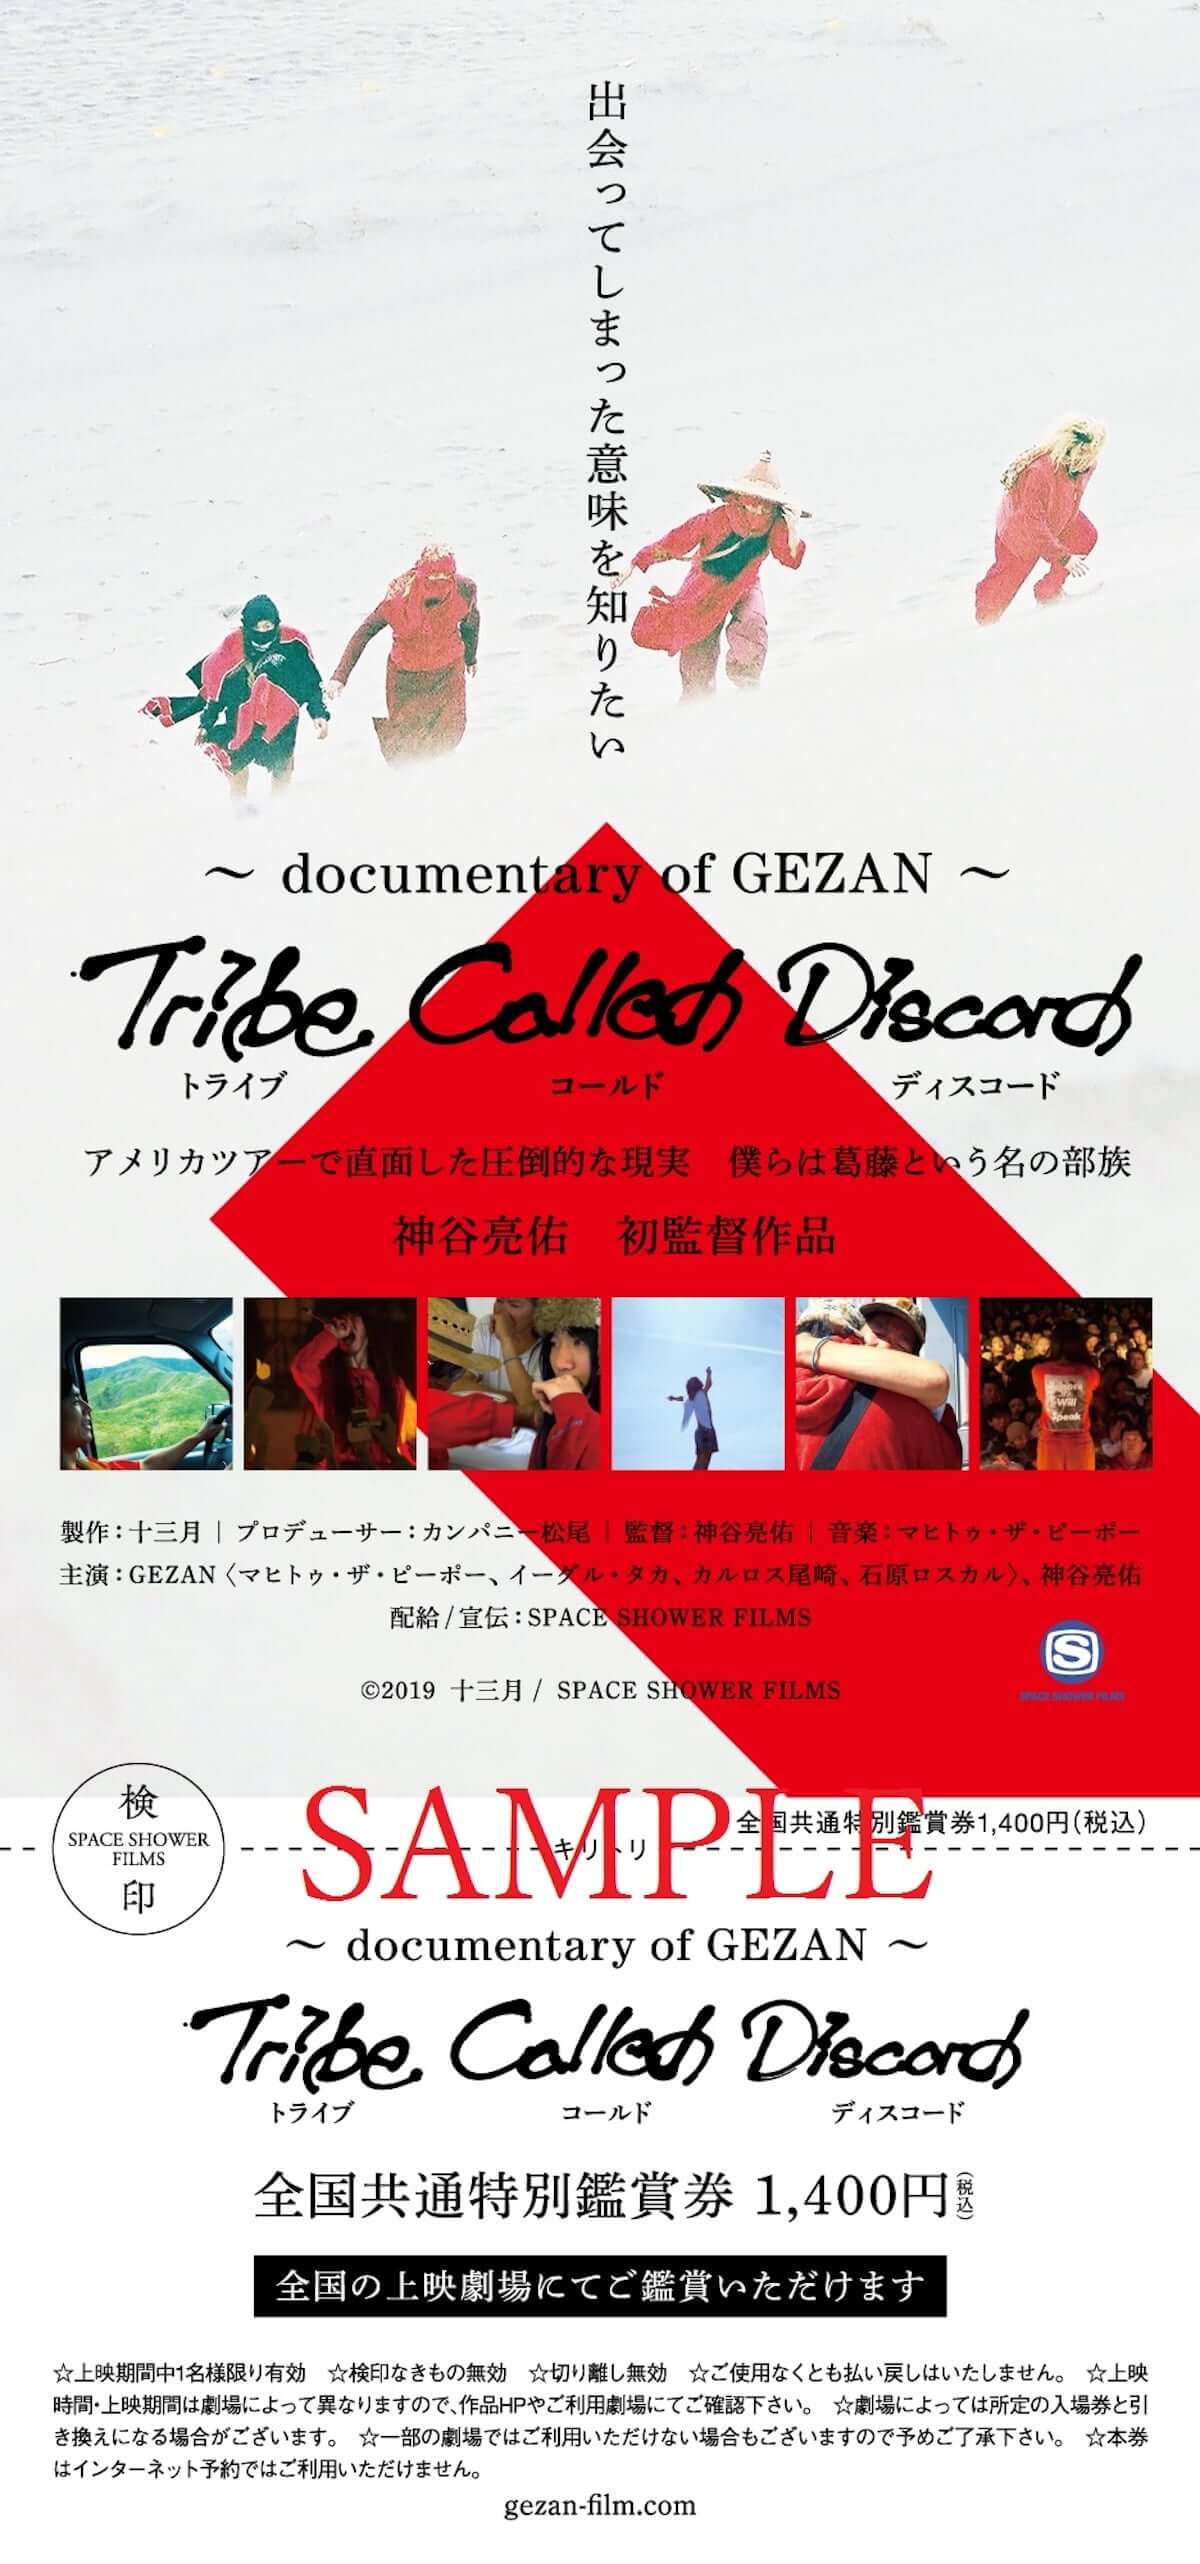 『Tribe Called Discord：Documentary of GEZAN』ライター磯部涼の映画評が公開 film190423_gezan_1-1200x2564